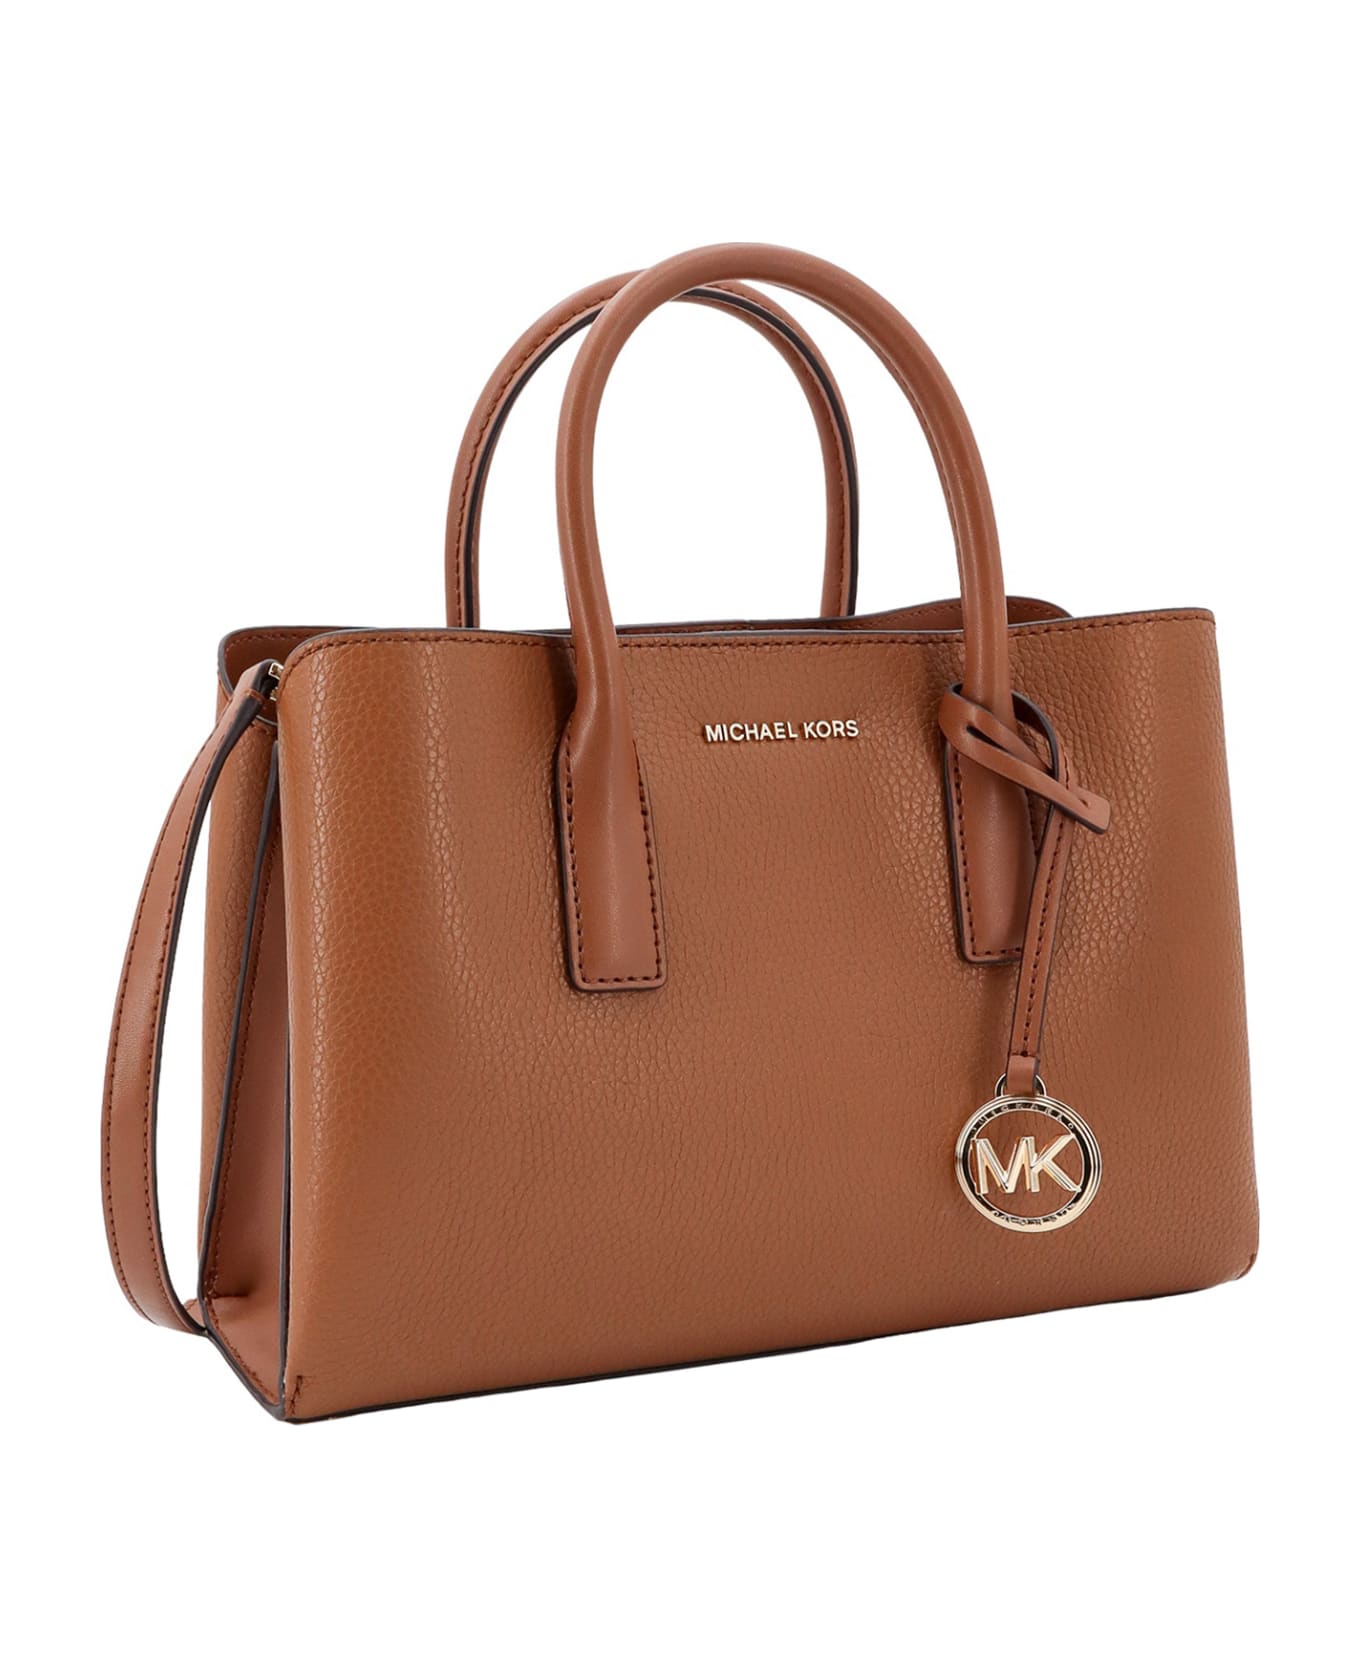 Michael Kors Ruthie Small Leather Handbag - Brown